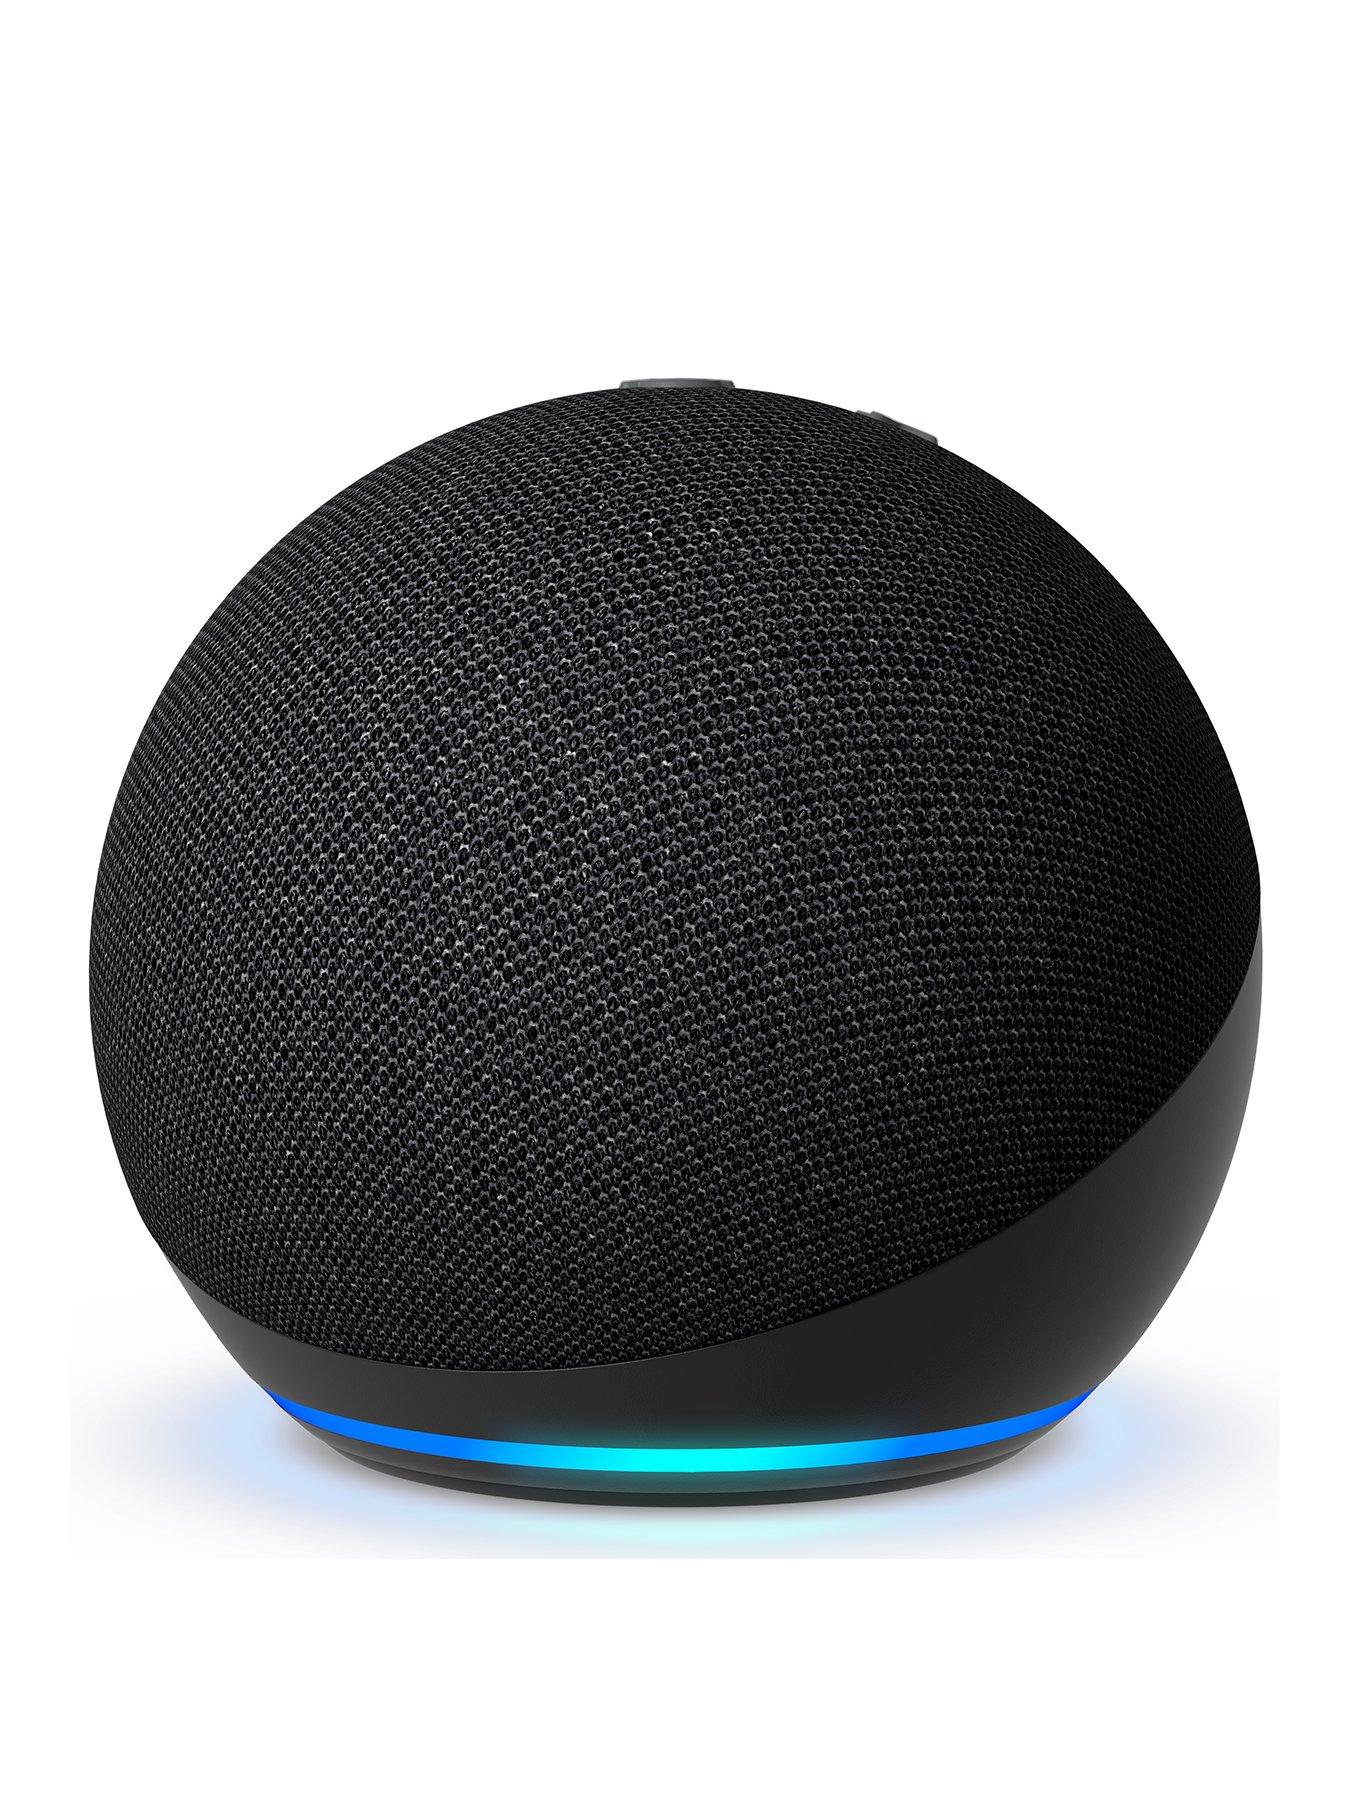 Echo Pop speaker offers full-bodied sound & Alexa compatibility